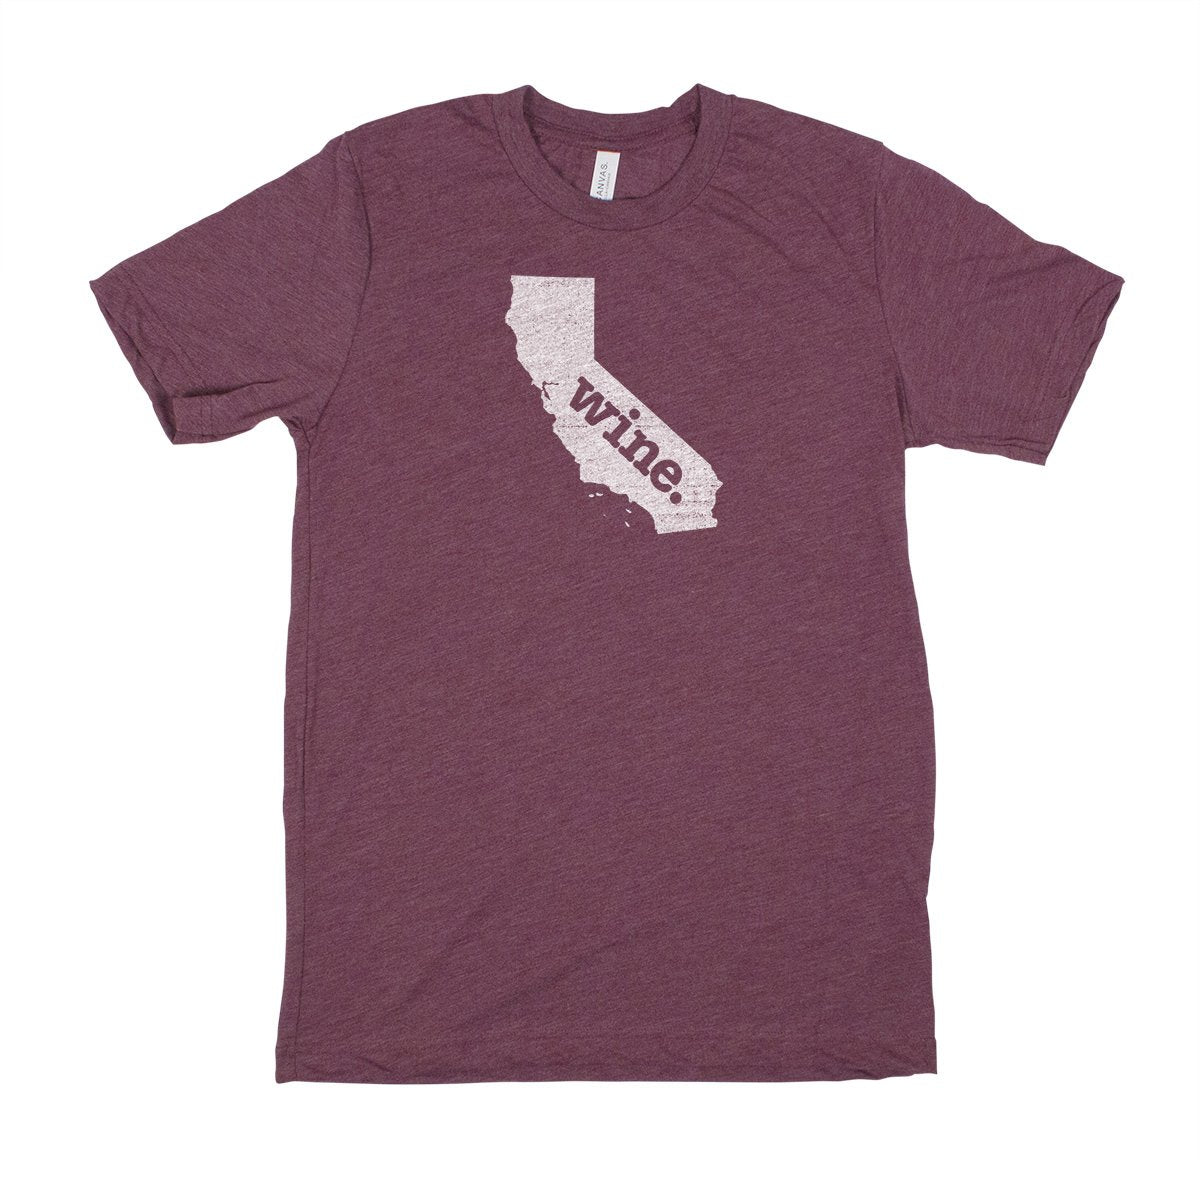 hike. Men's Unisex T-Shirt - Michigan